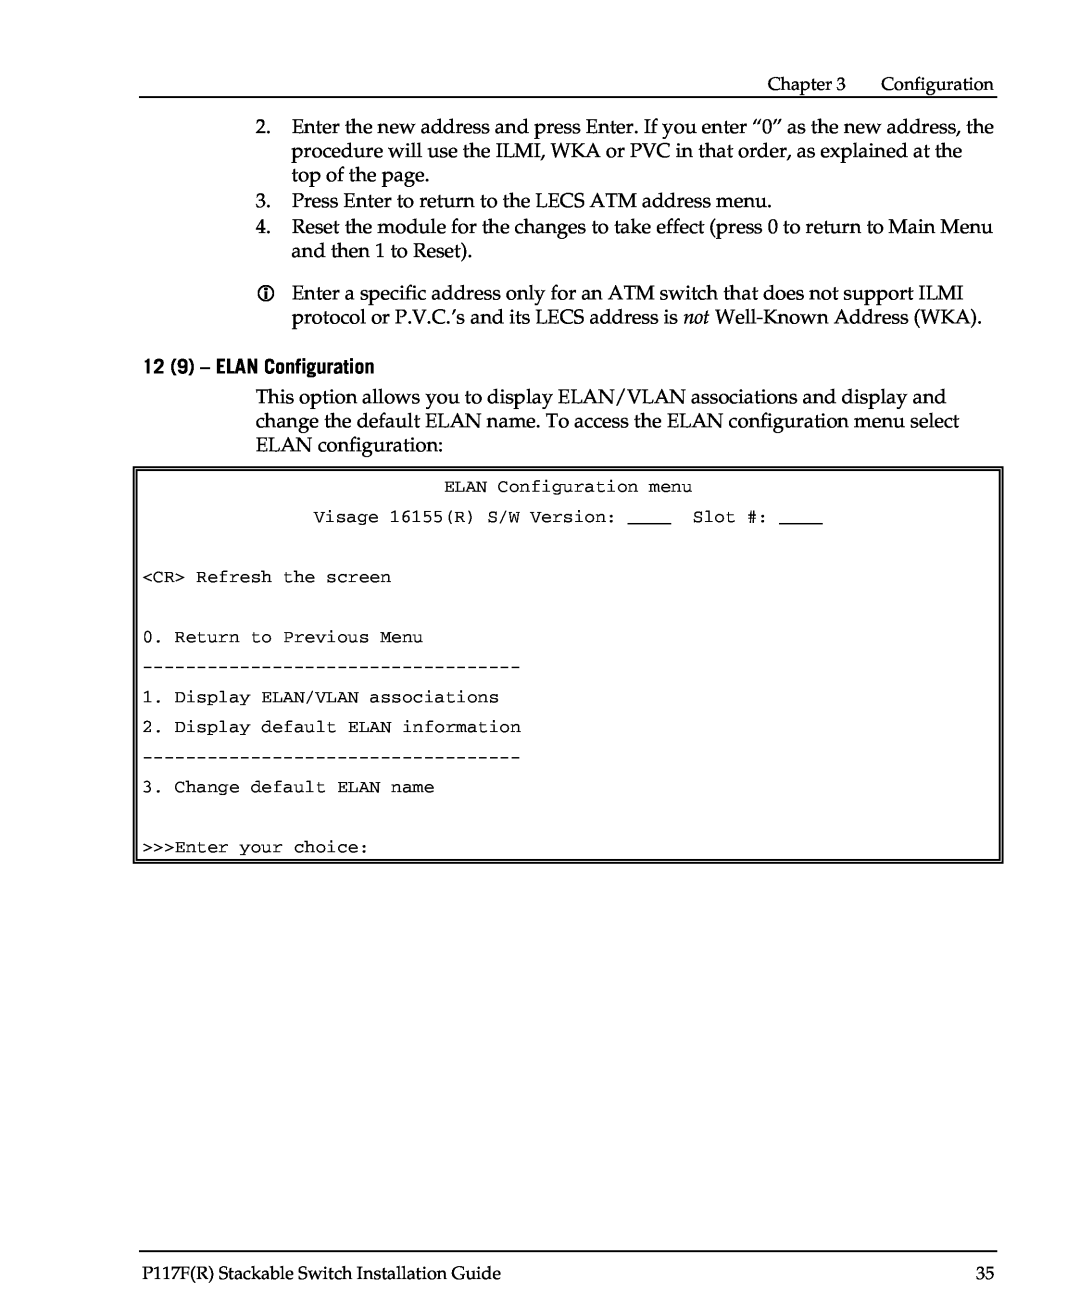 Avaya P117F(R) manual 12 9 - ELAN Configuration 